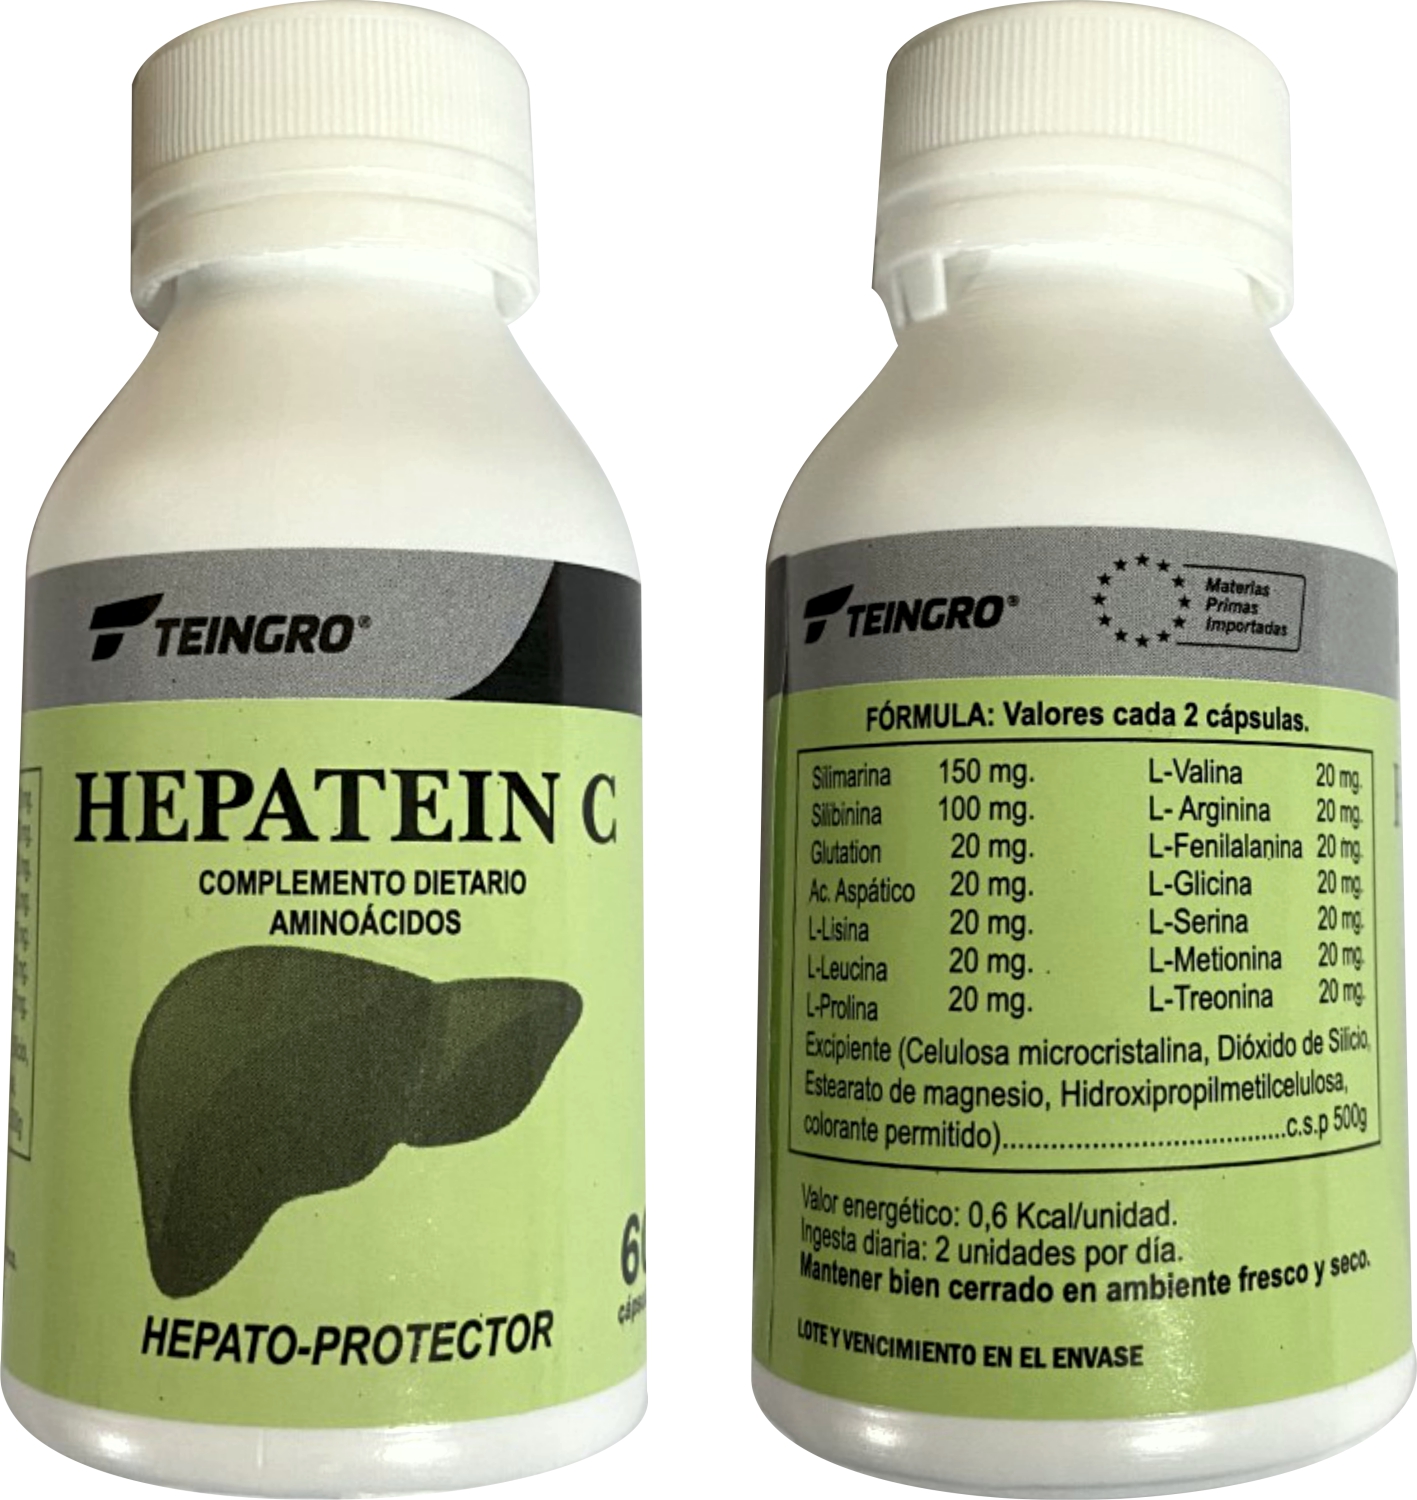 hepatein c image